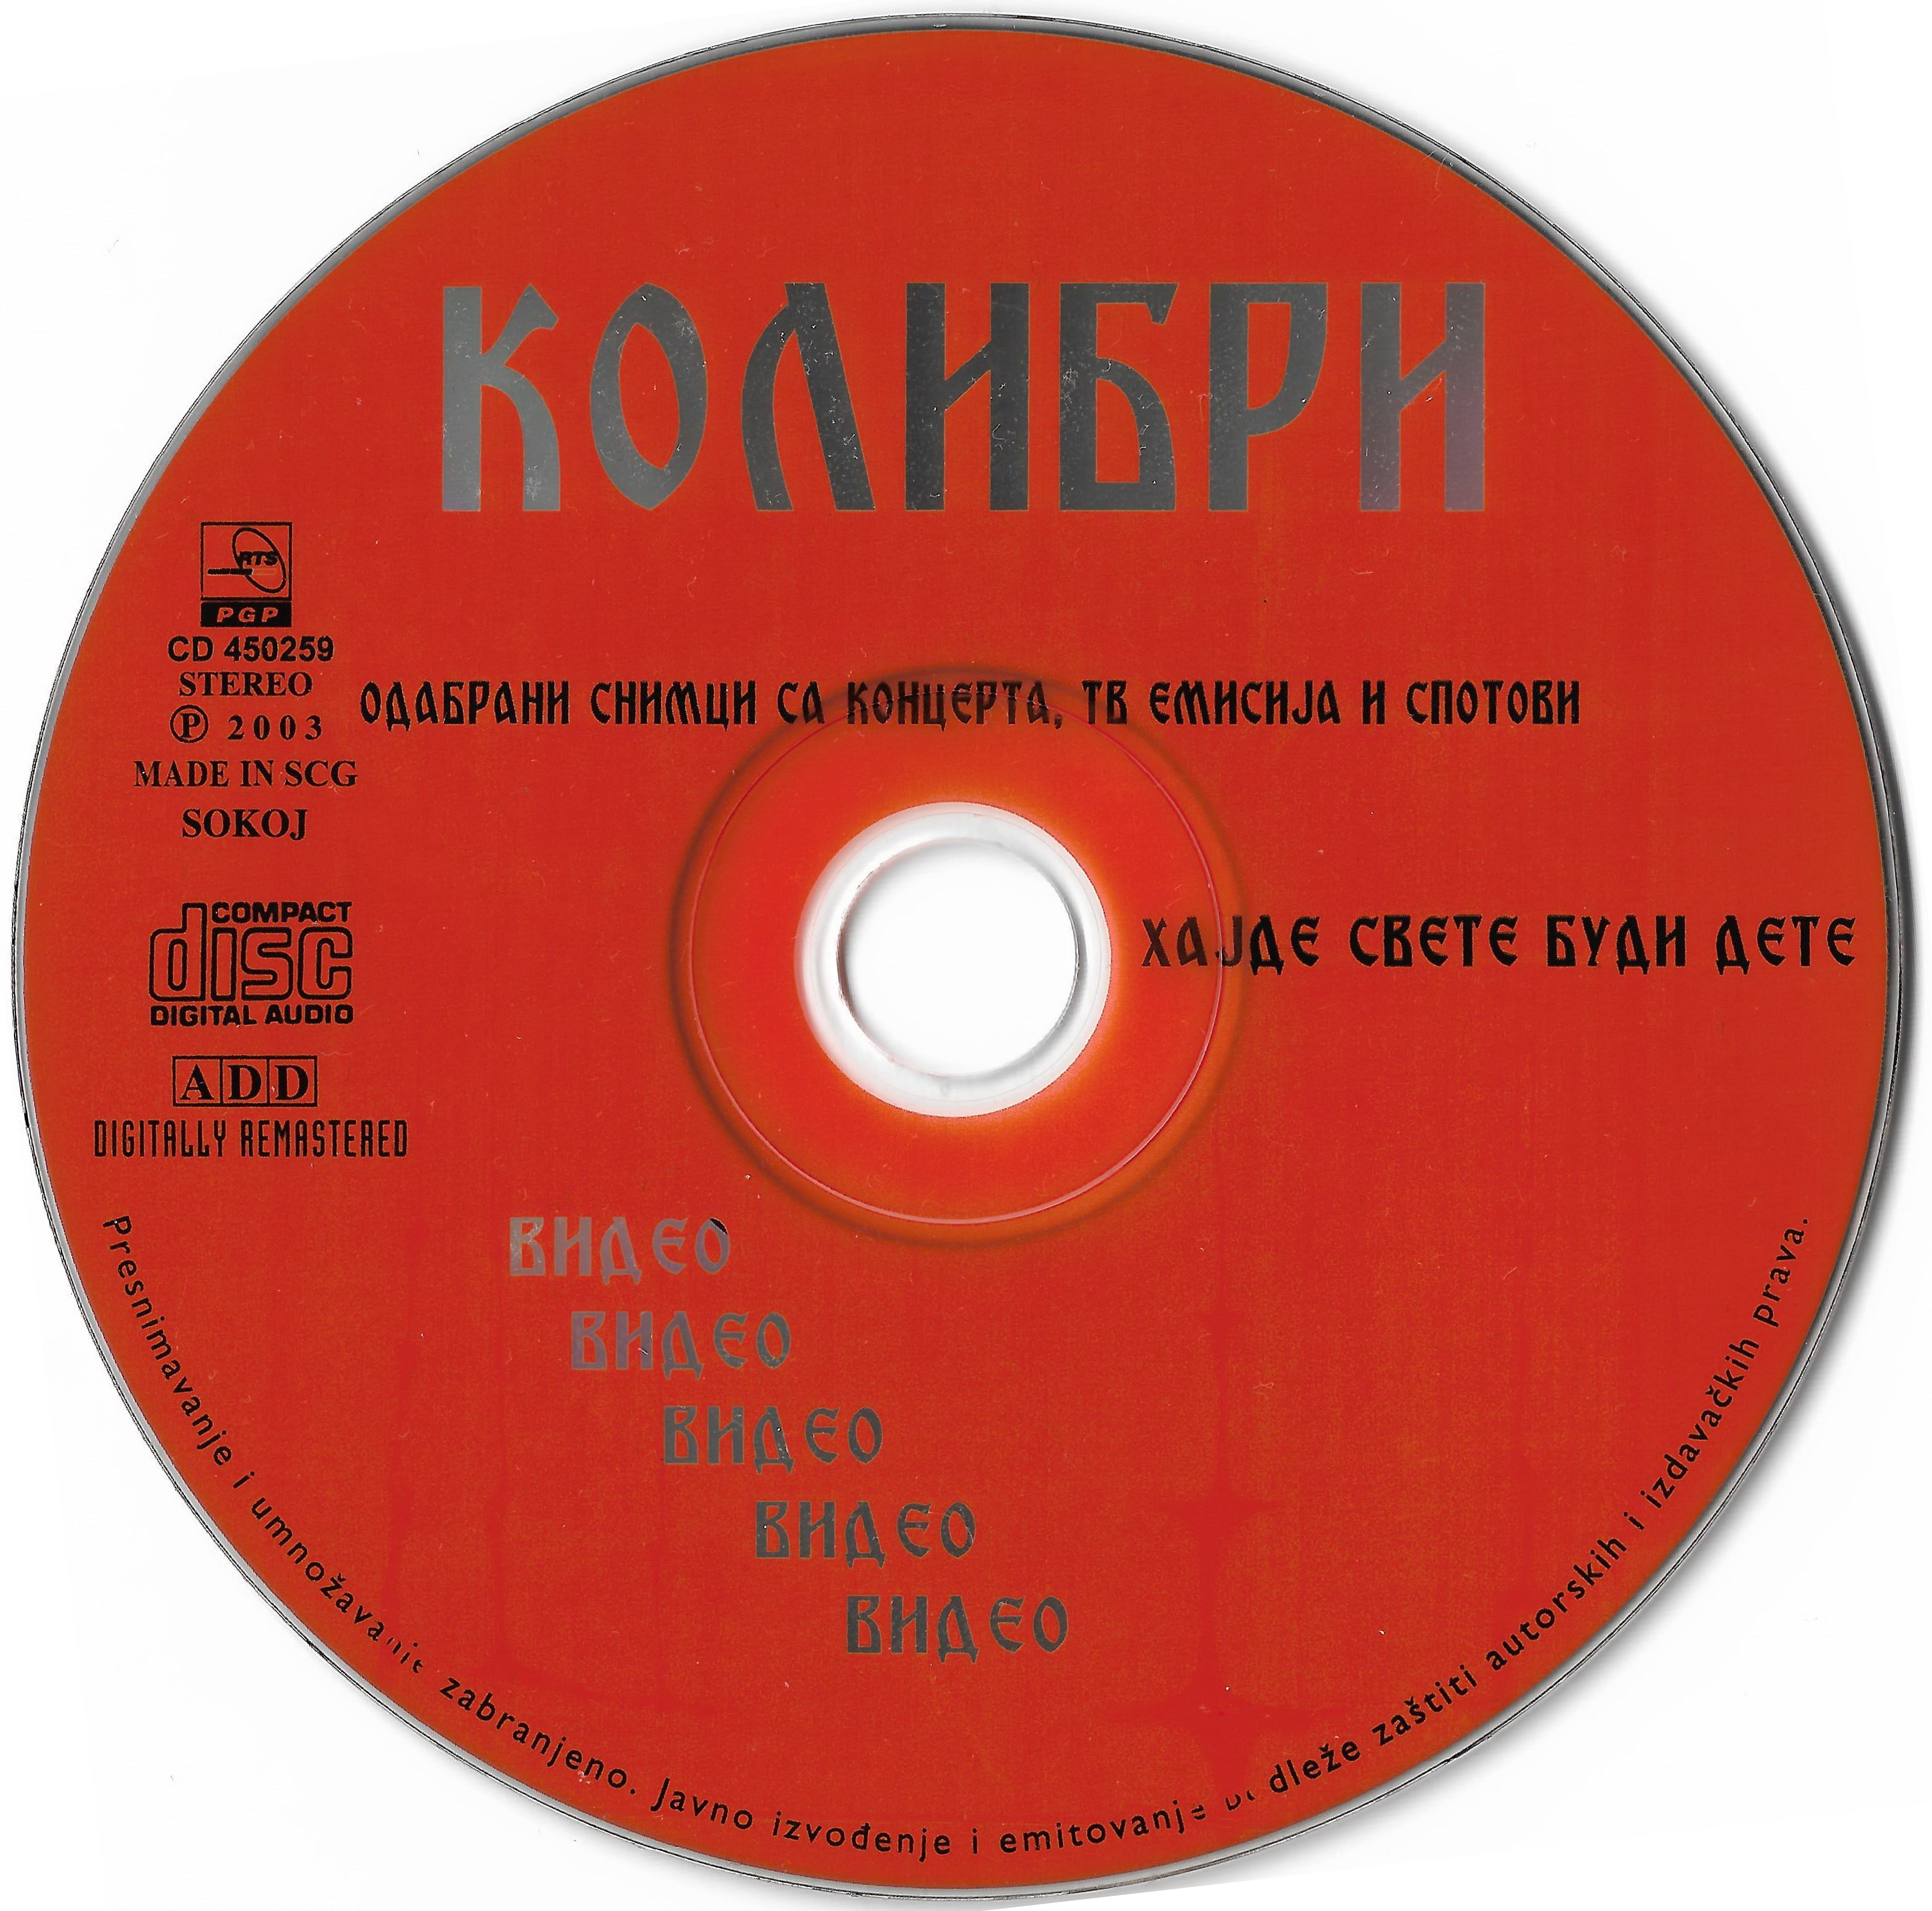 Kolibri 2003 VCD